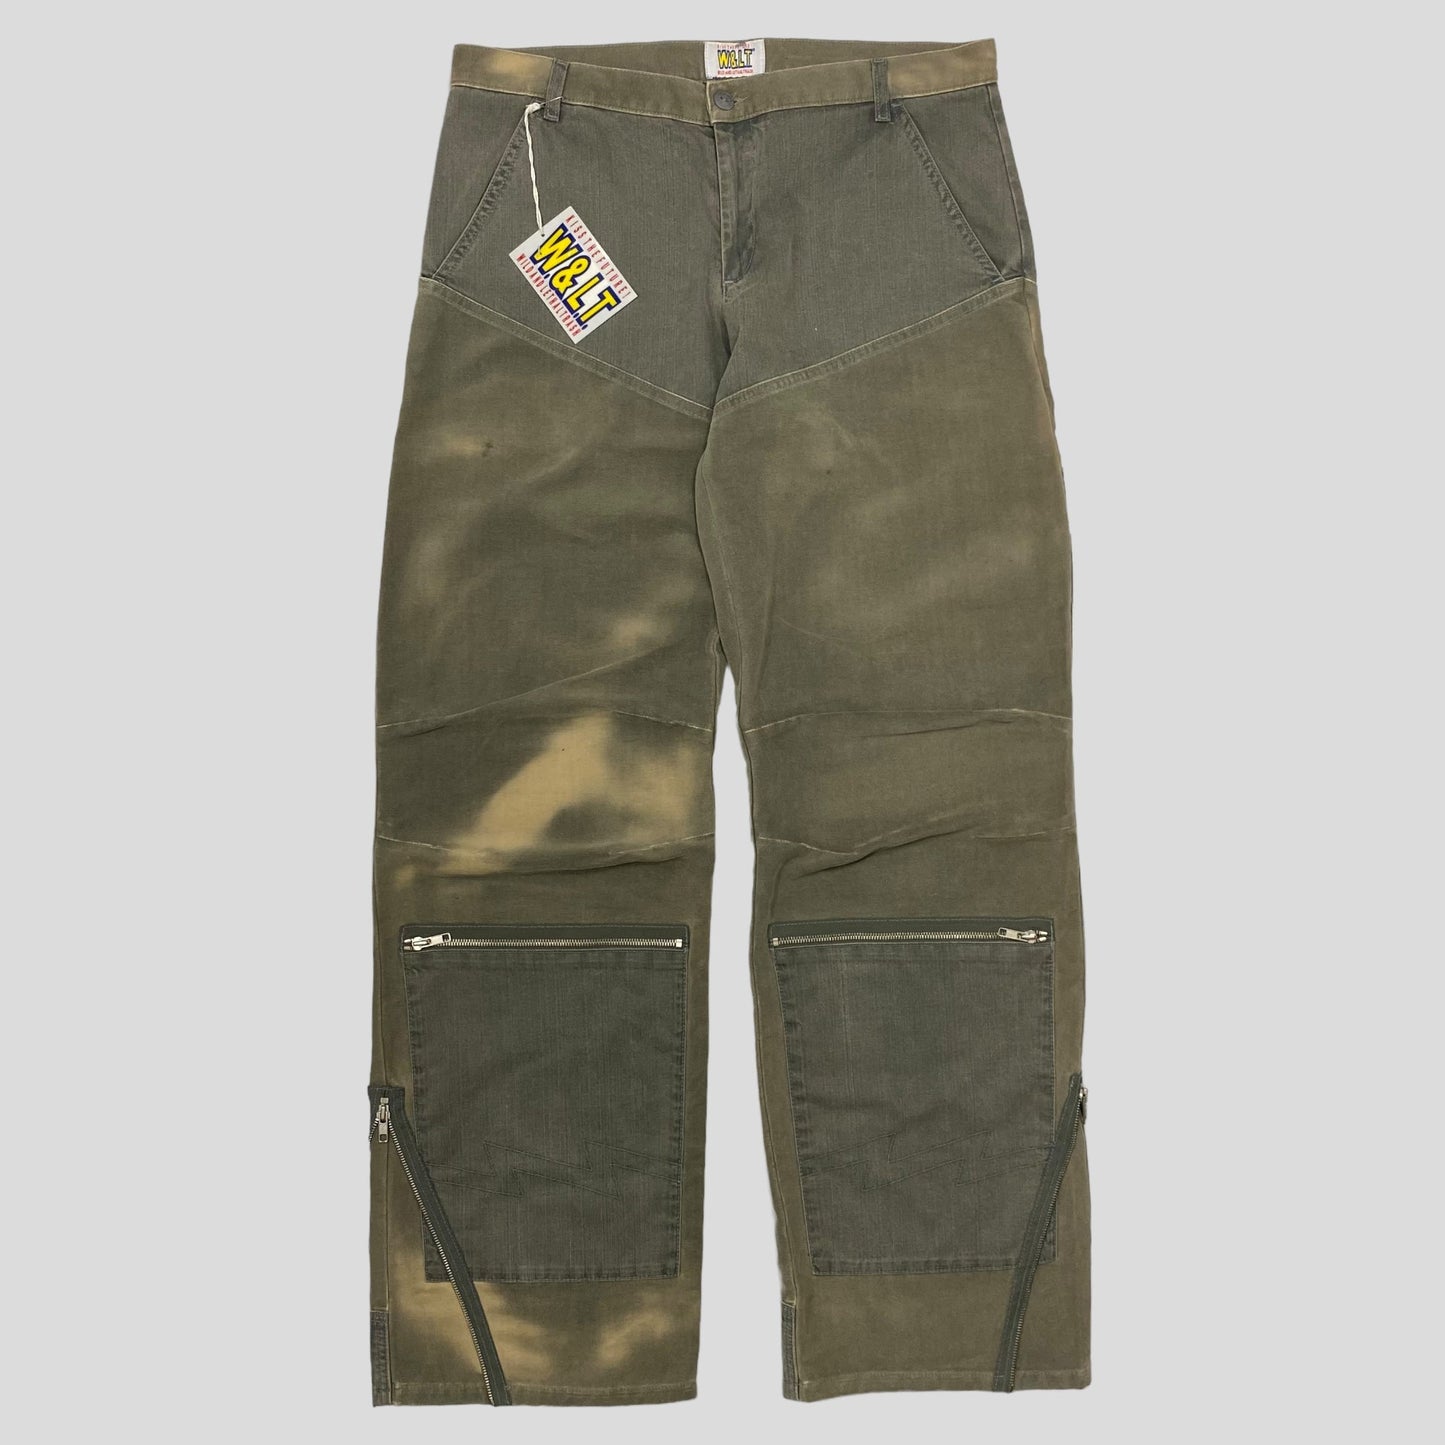 W+LT 2003 Heat Reactive Panelled Carpenter Jeans - 34-36